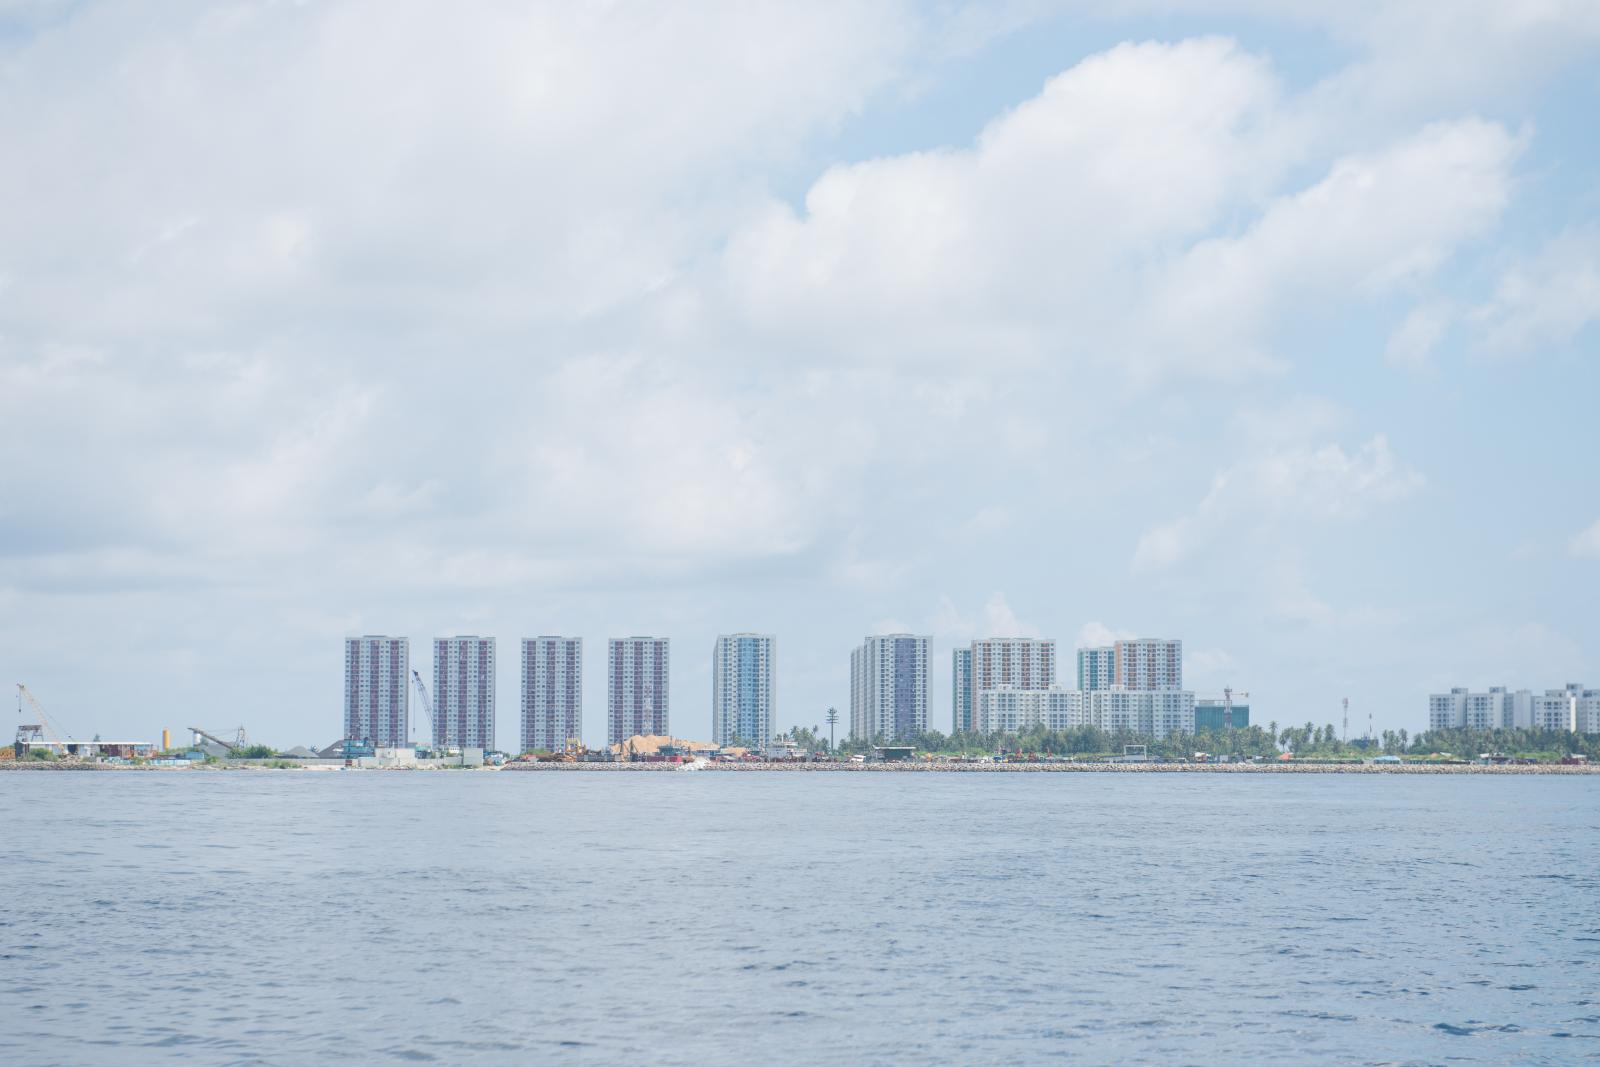 A view of the skyline of Hulhum...Malé region. Hulhumalé Maldives